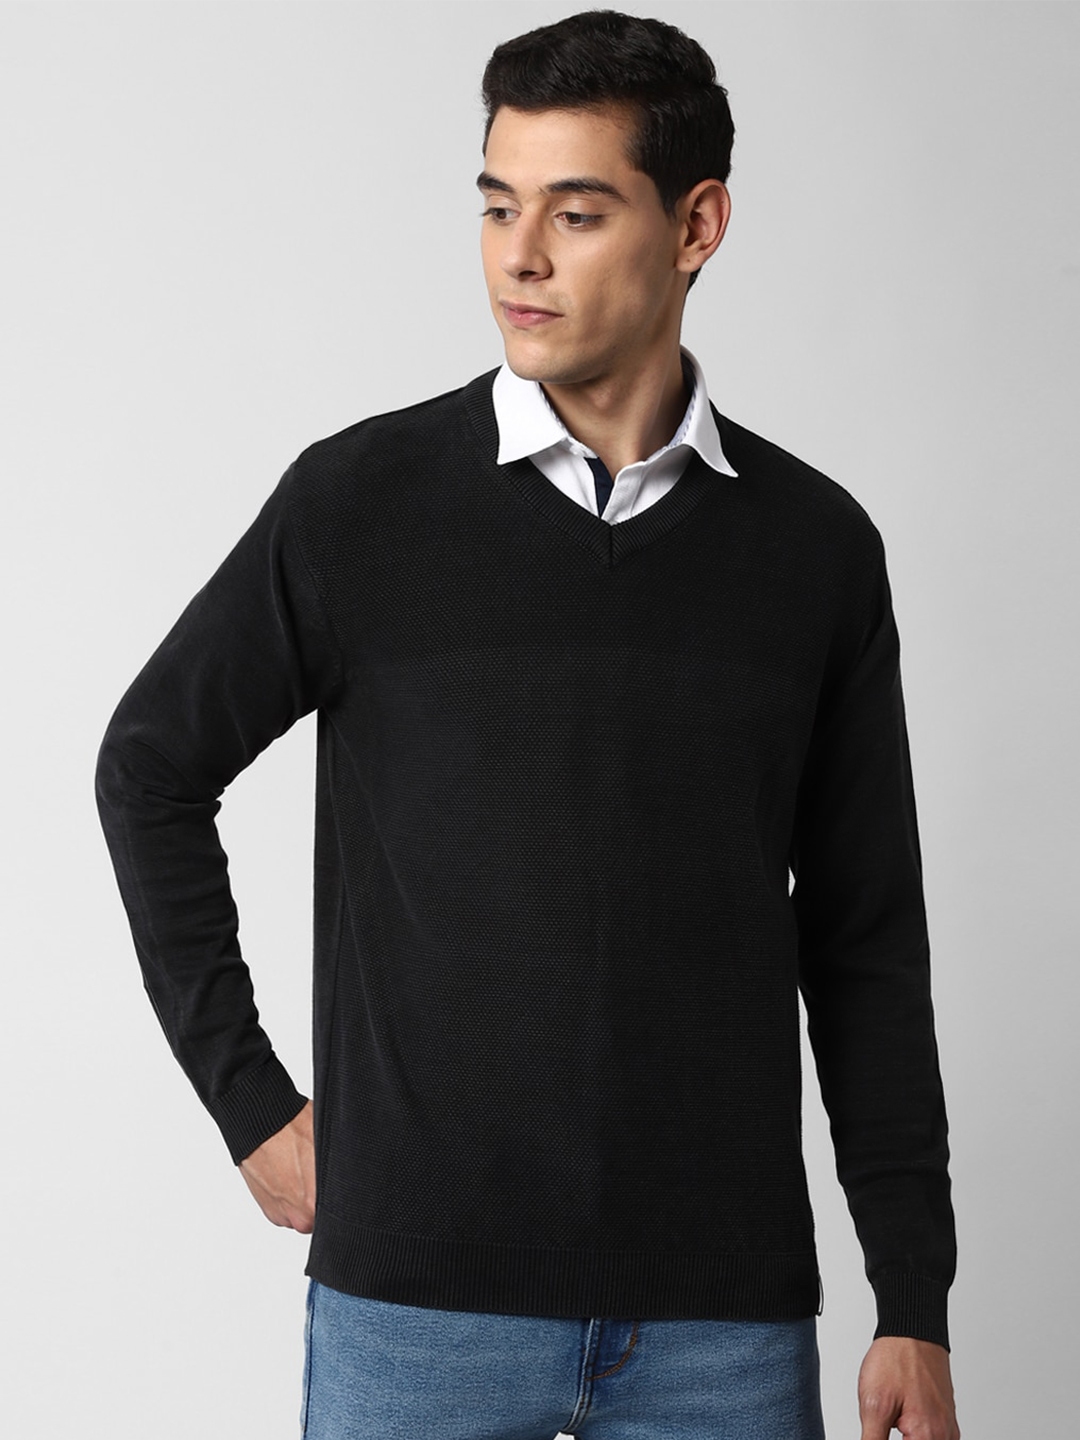 Buy Peter England Casuals Men Black Pullover - Sweaters for Men ...